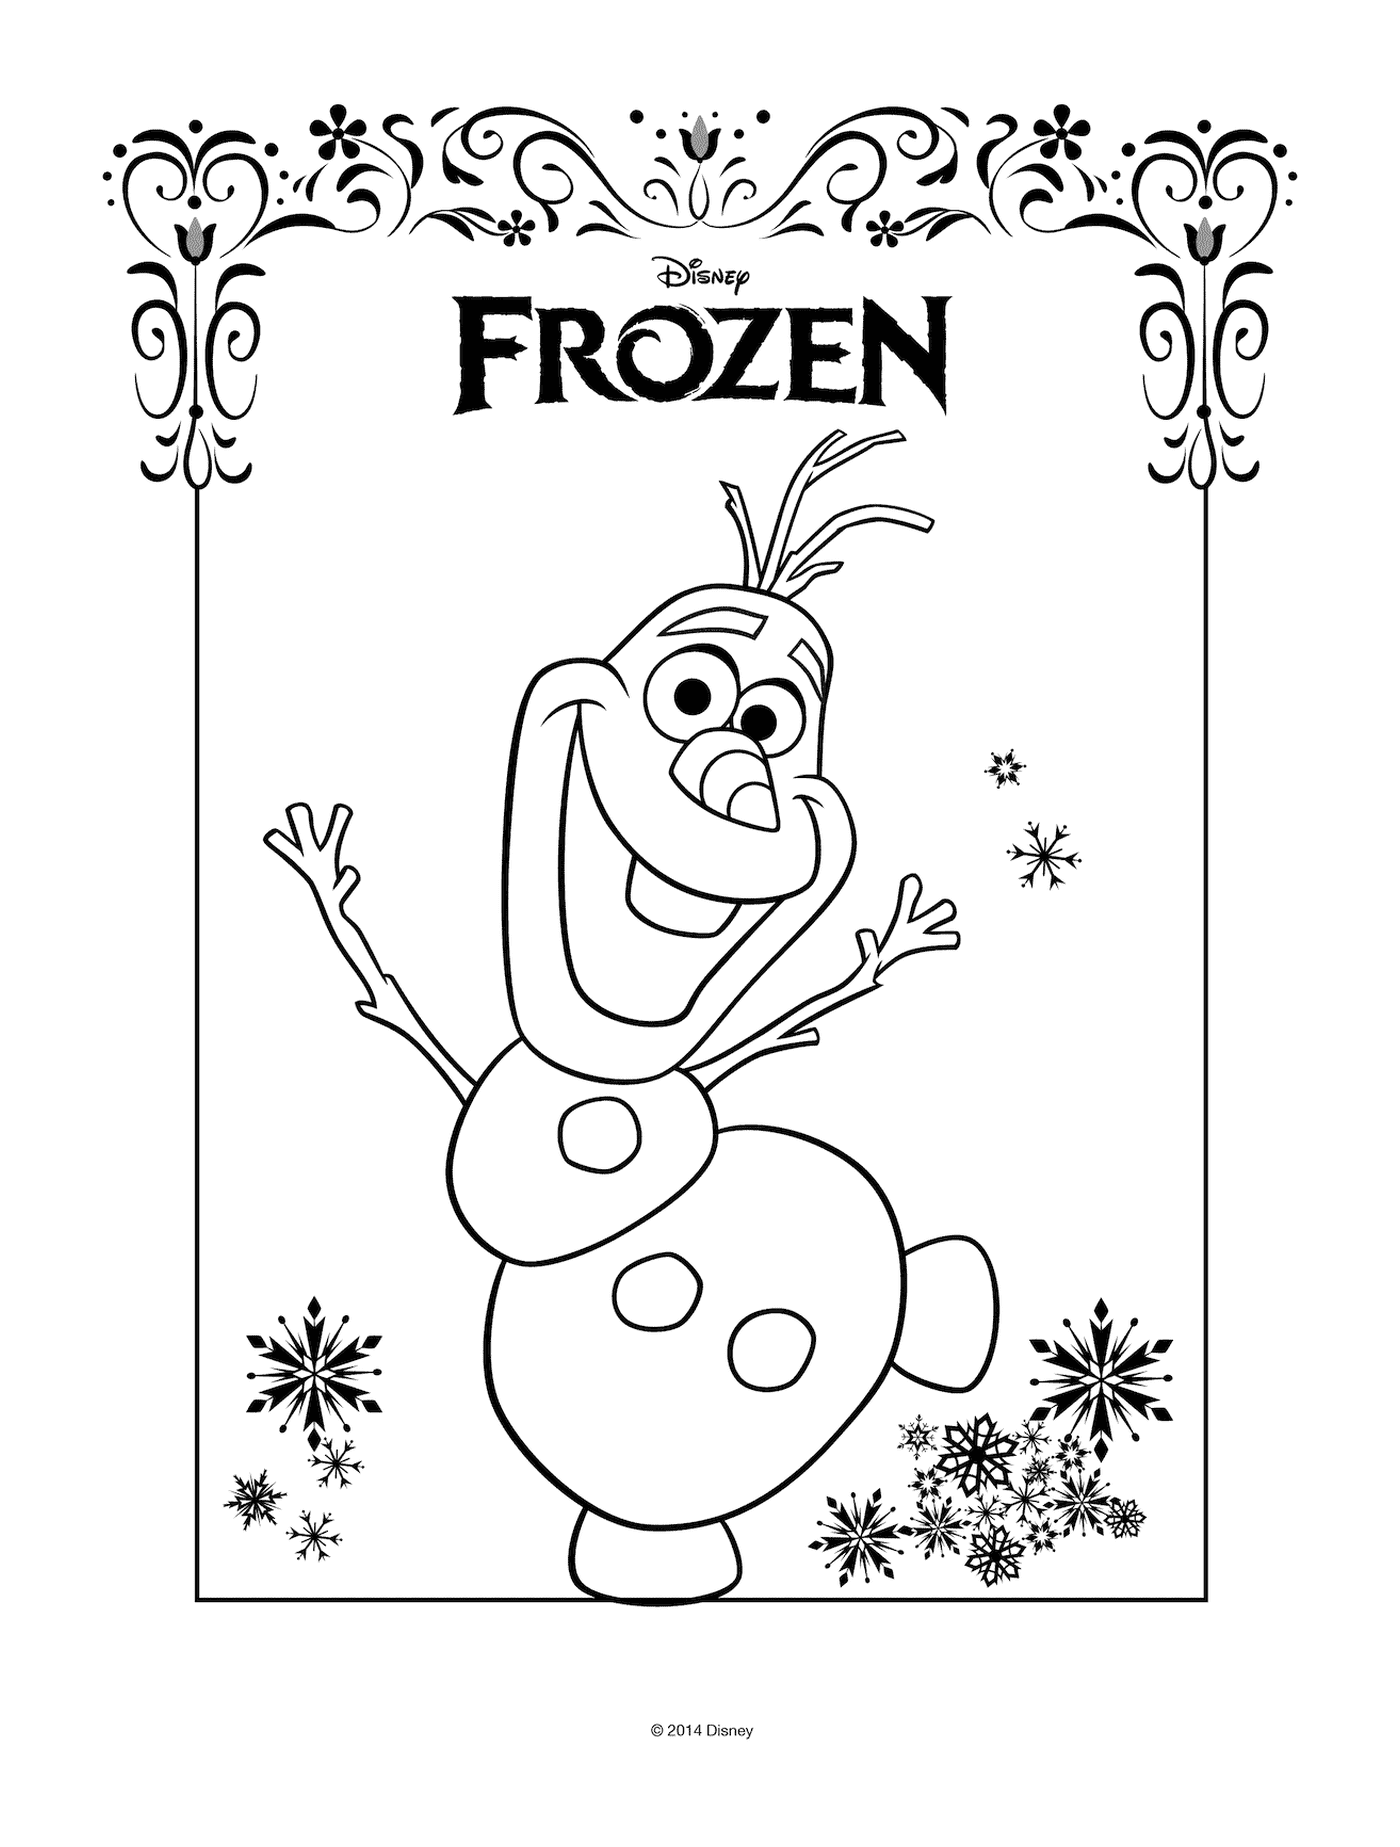   Olaf avec le logo Frozen de Disney 